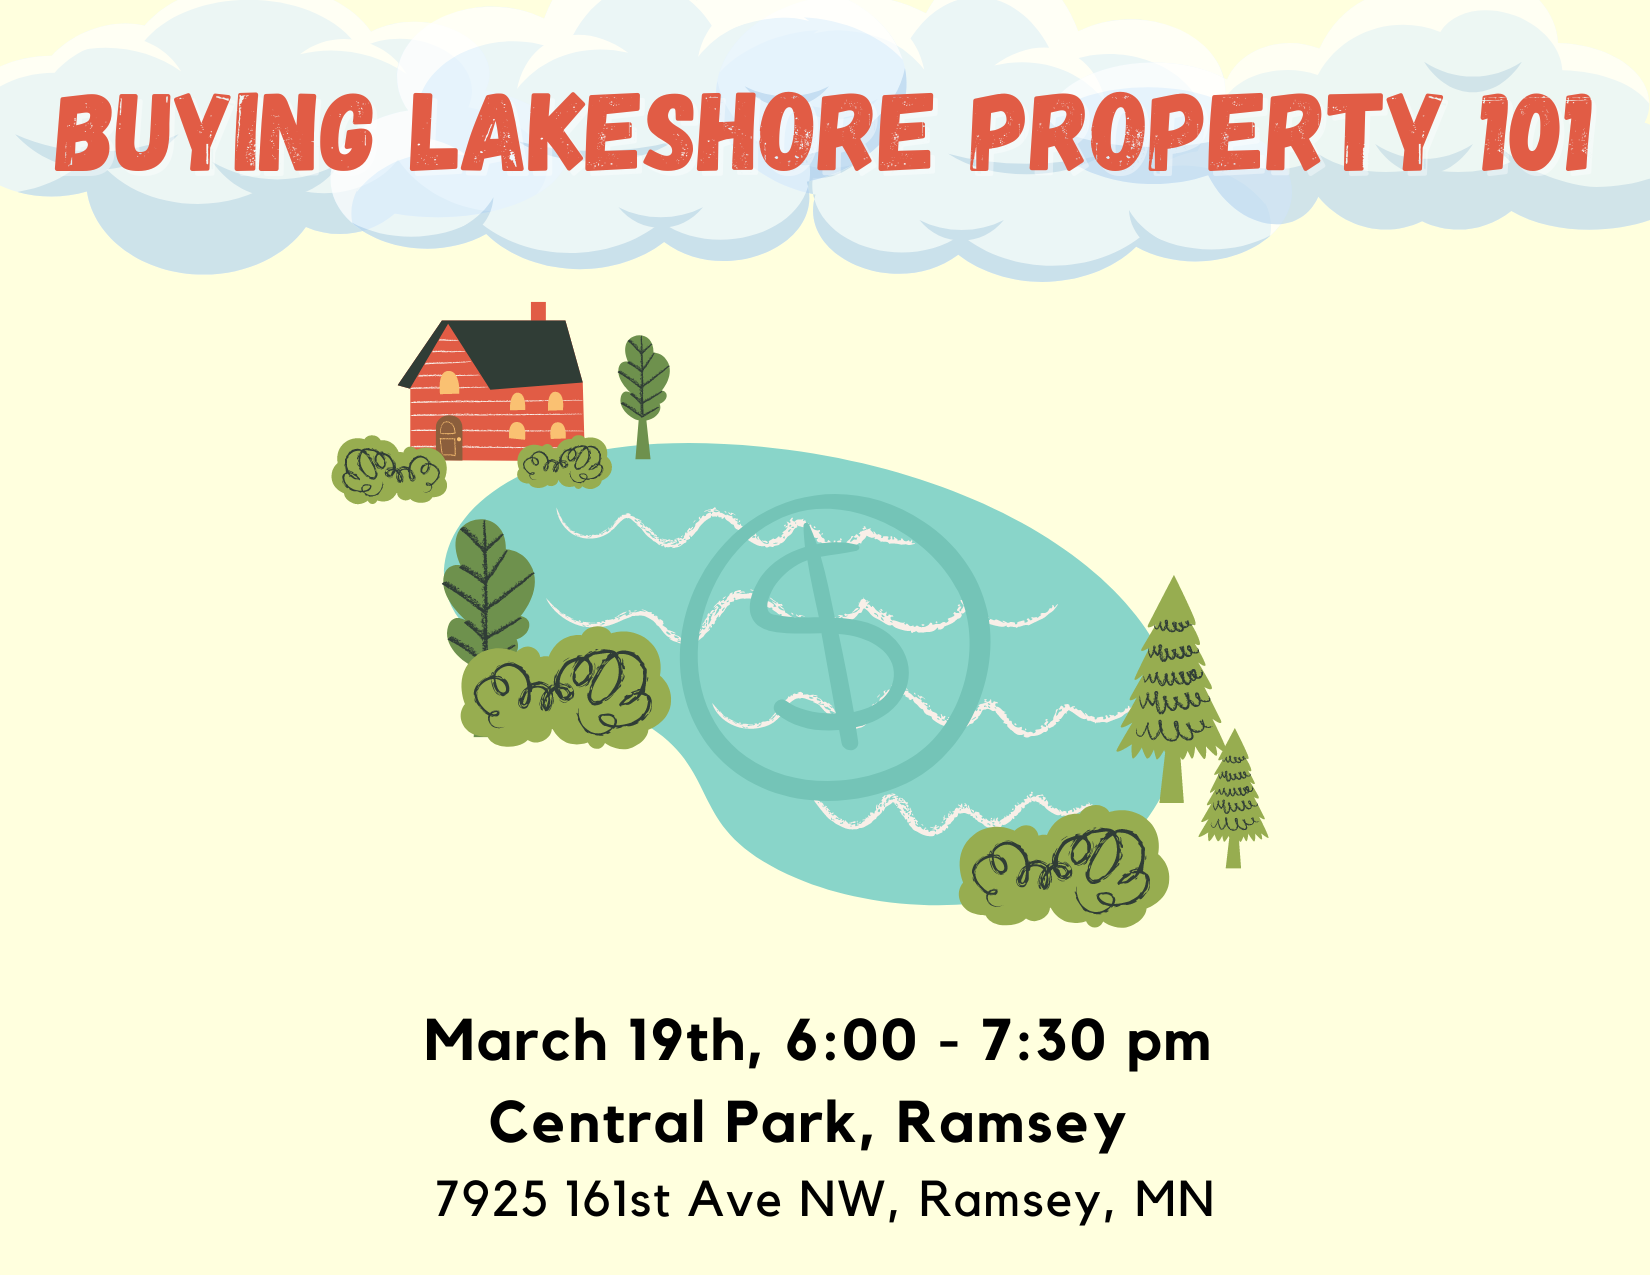 Buying lakeshore property 101